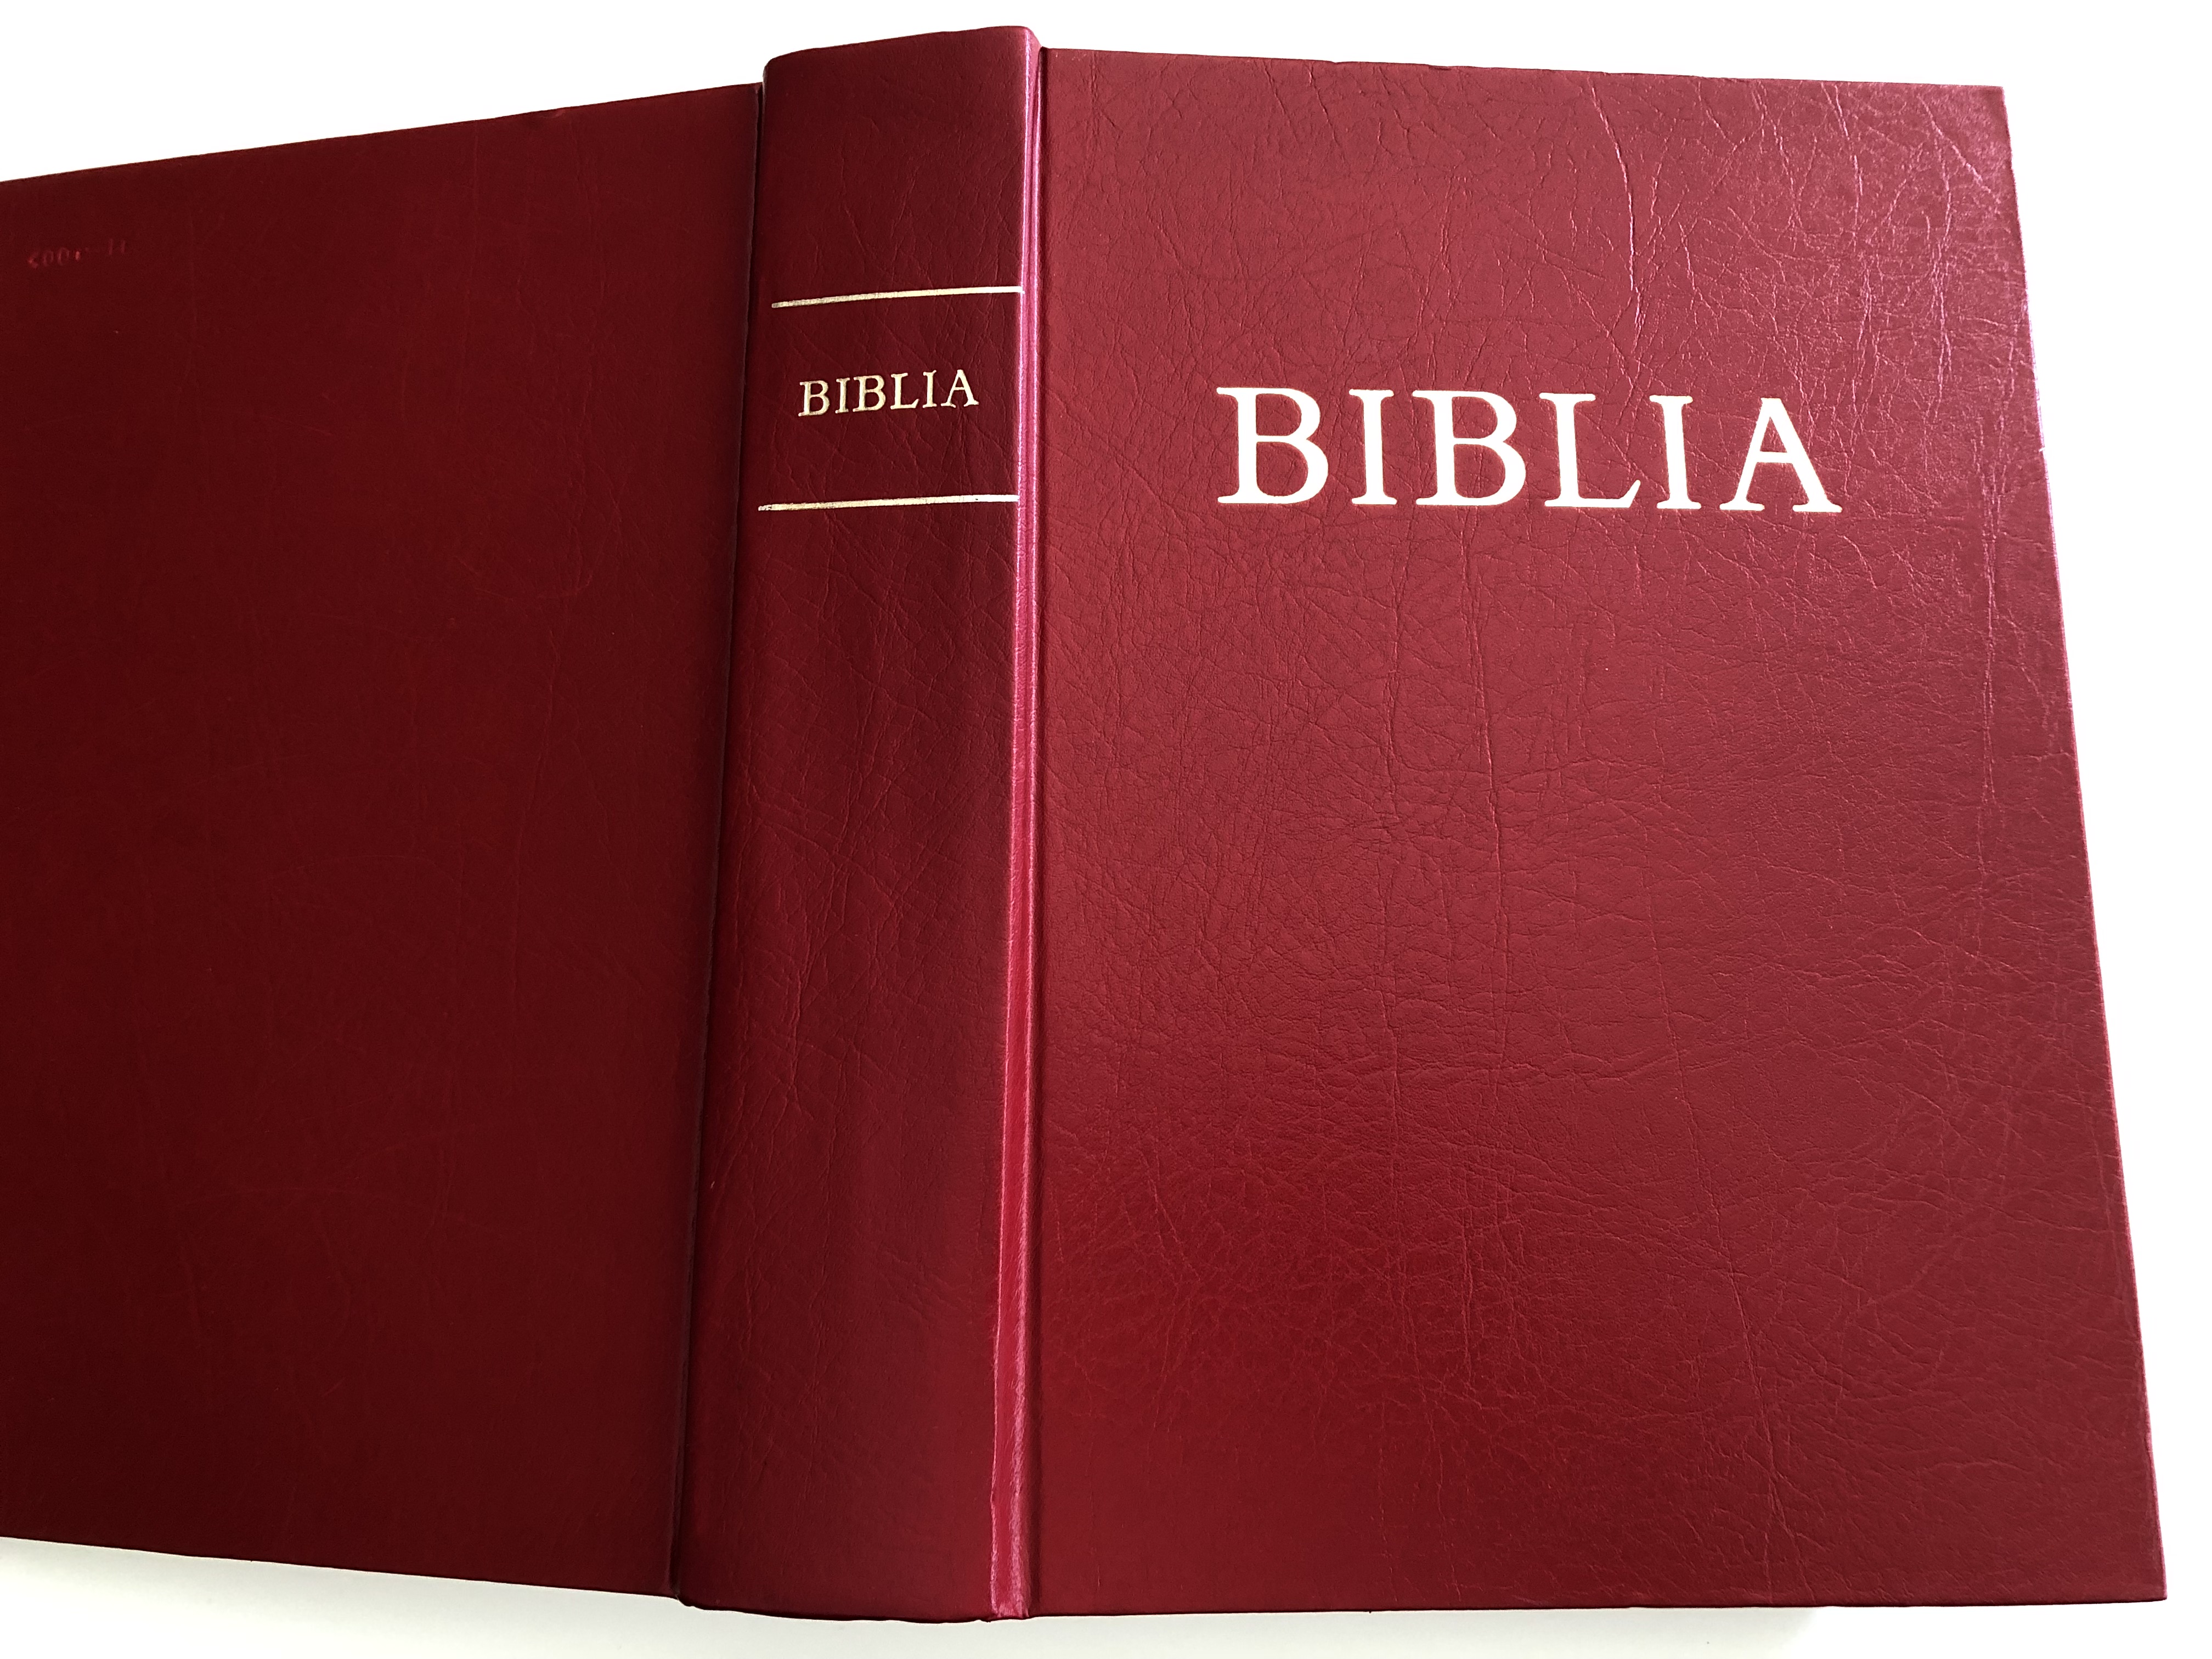 biblia-hungarian-catholic-family-bible-sz-vets-gi-s-jsz-vets-gi-szent-r-s-szent-istv-n-t-rsulat-5th-edition-5.-kiad-s-red-hardcover-22-.jpg